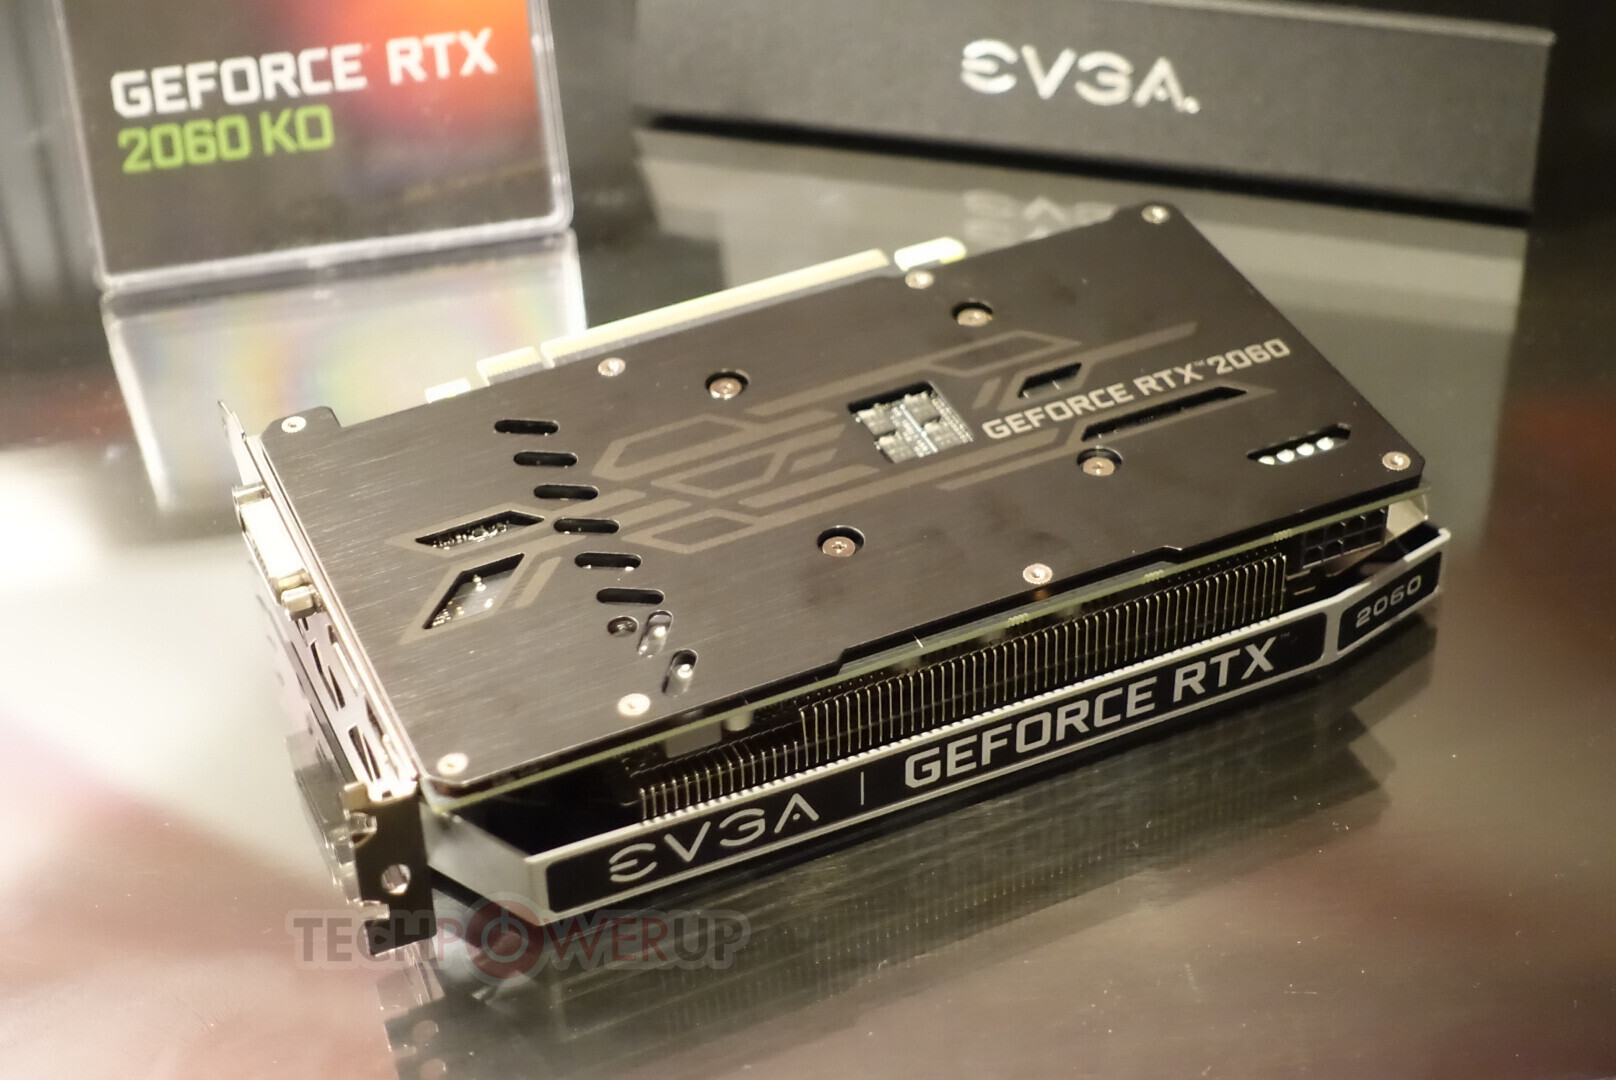 Media asset in full size related to 3dfxzone.it news item entitled as follows: EVGA mostra la GeForce RTX 2060 KO, possibile risposta NVIDIA alla RX 5600 XT | Image Name: news30343_EVGA-GeForce-RTX-2060-KO_3.jpg